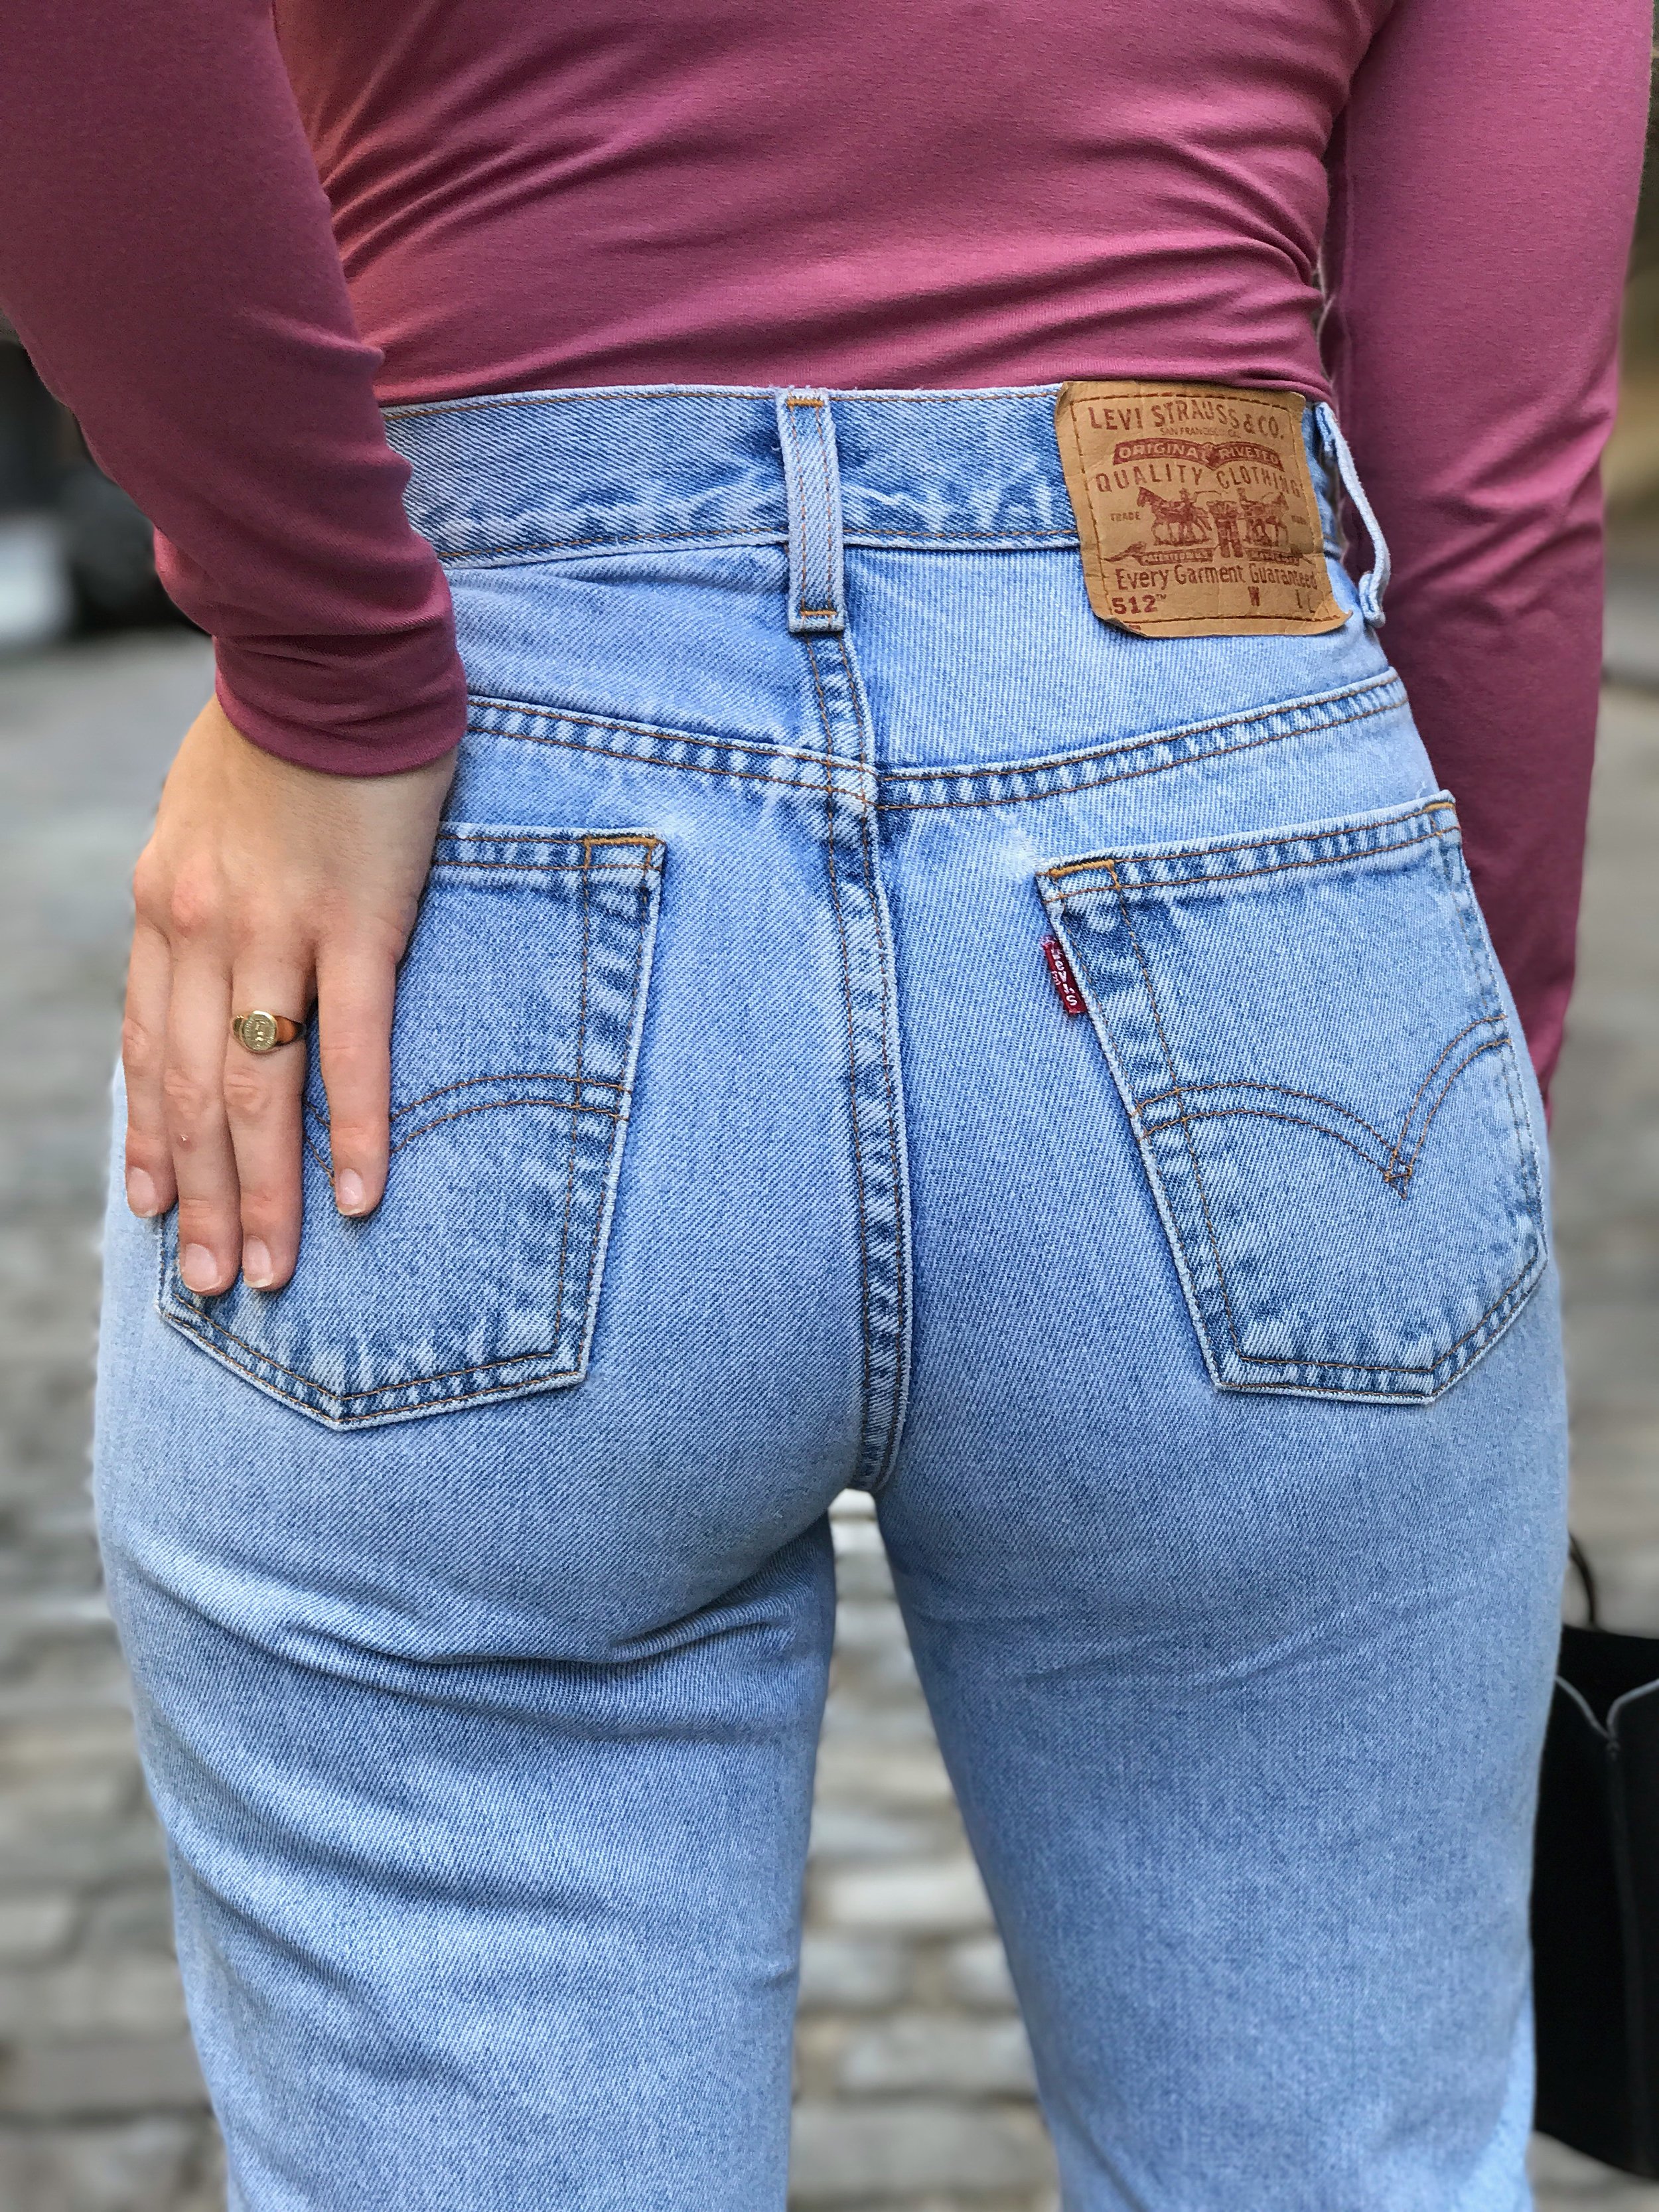 levi jeans for curvy figure